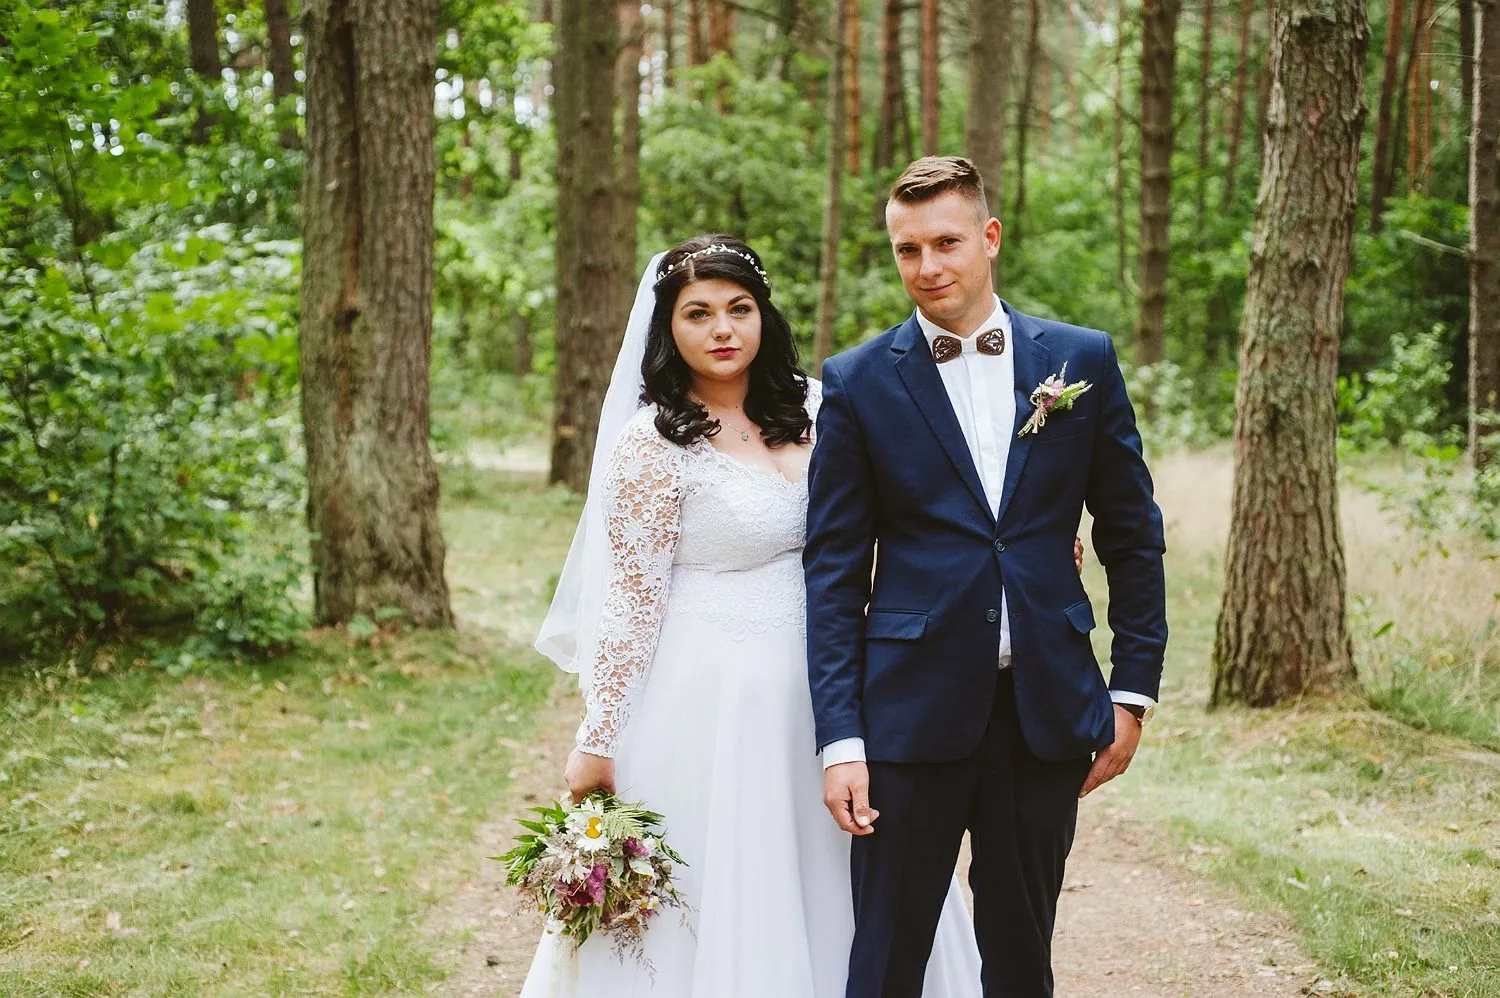 angelikakrzysztof_aftersession_4.webp - Angelika & Krzysztof- Monika Chmielewska - wedding, portaits, family photography - Munich